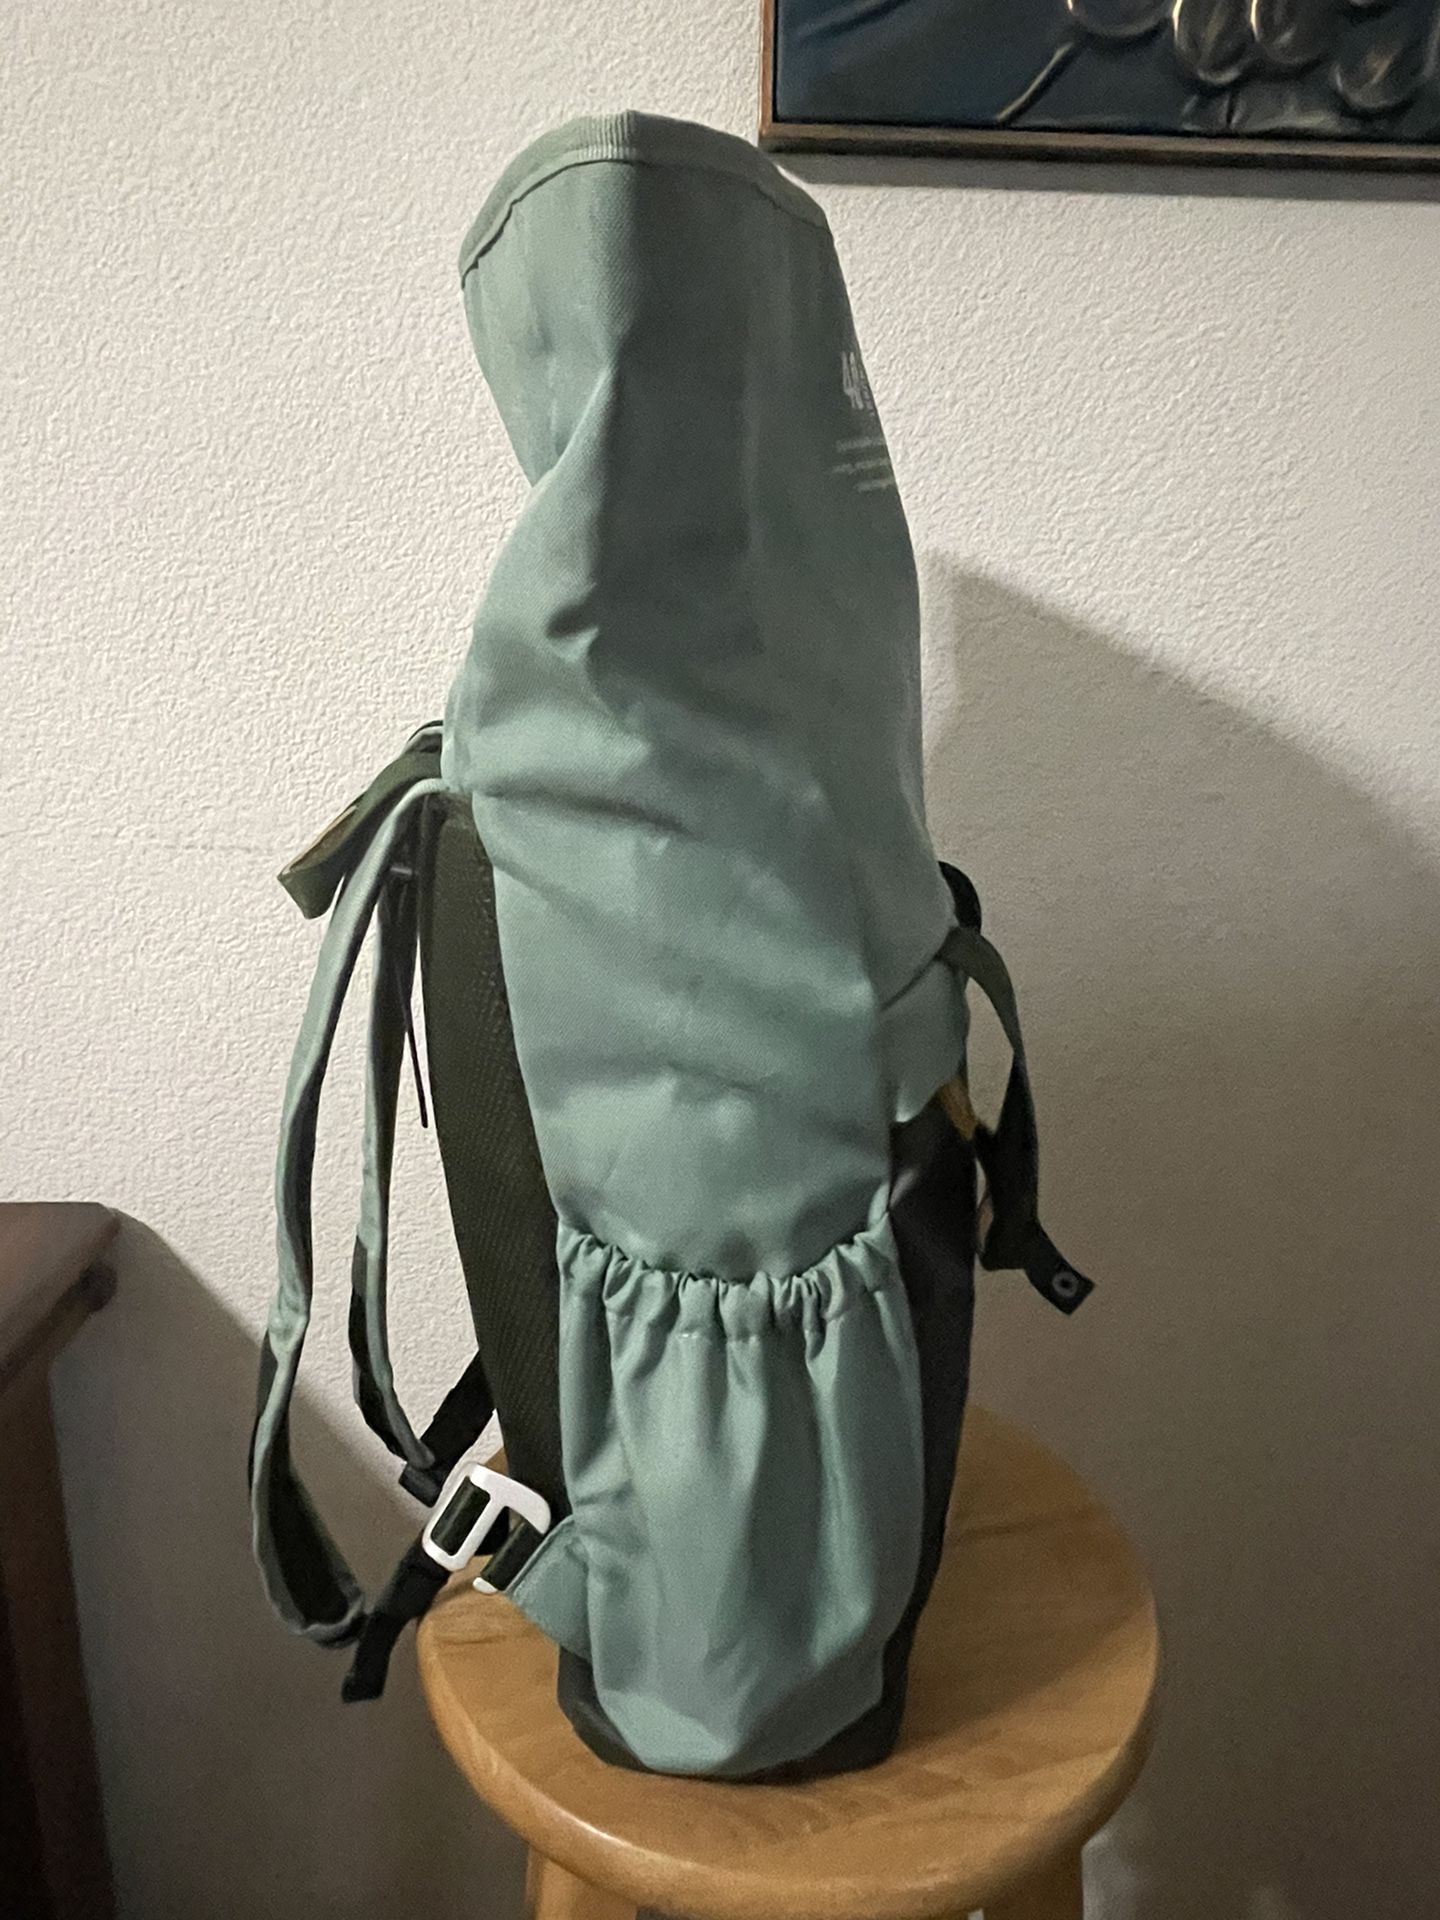 dōTERRA Backpack, Roll Top Bag, Rucksack Backpack, Adventure Backpack.